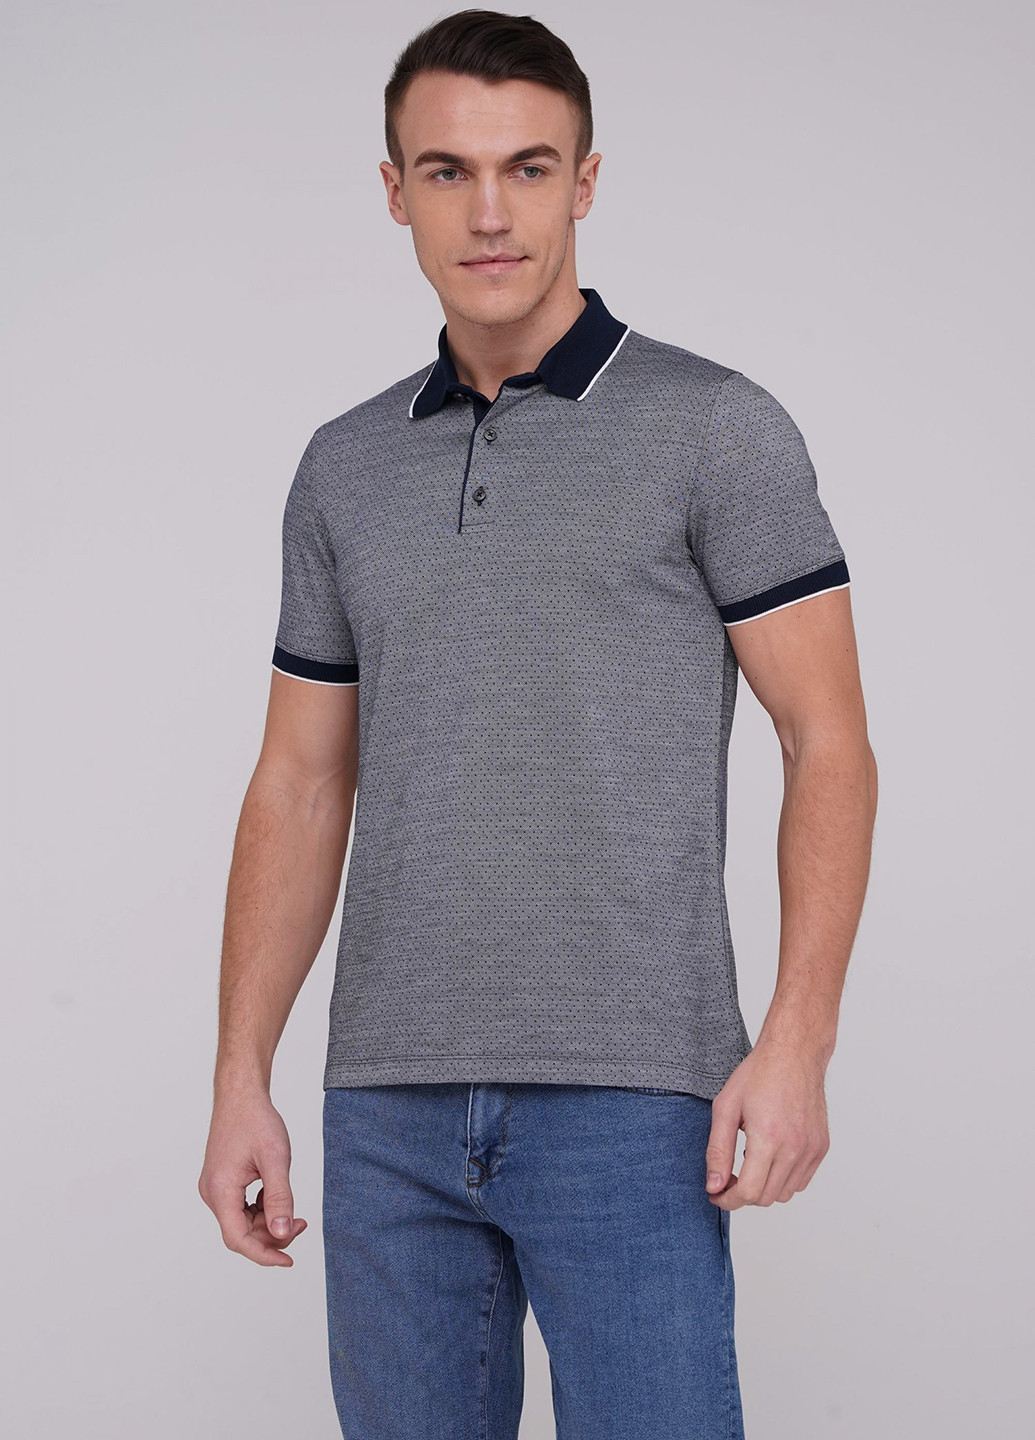 Темно-серая футболка-поло для мужчин Trend Collection с геометрическим узором